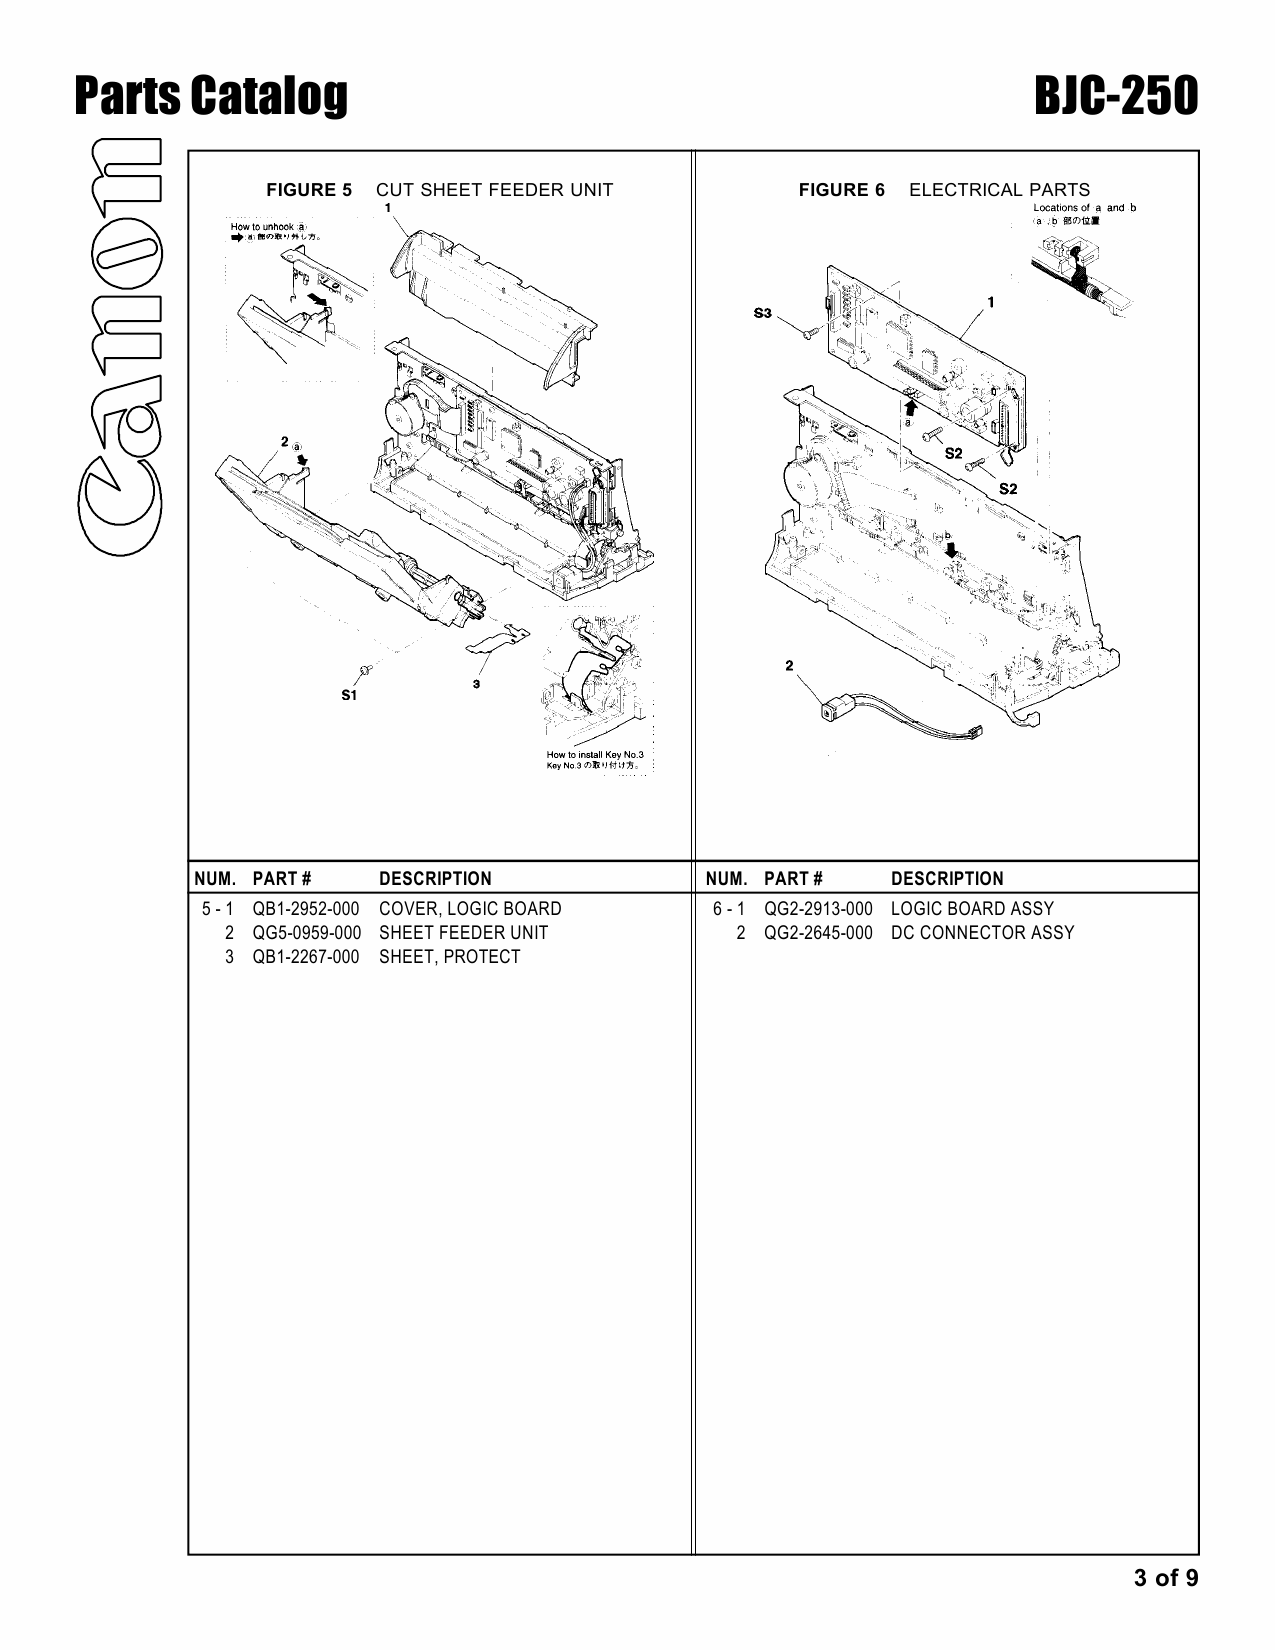 Canon BubbleJet BJC-250 Parts Catalog Manual-3